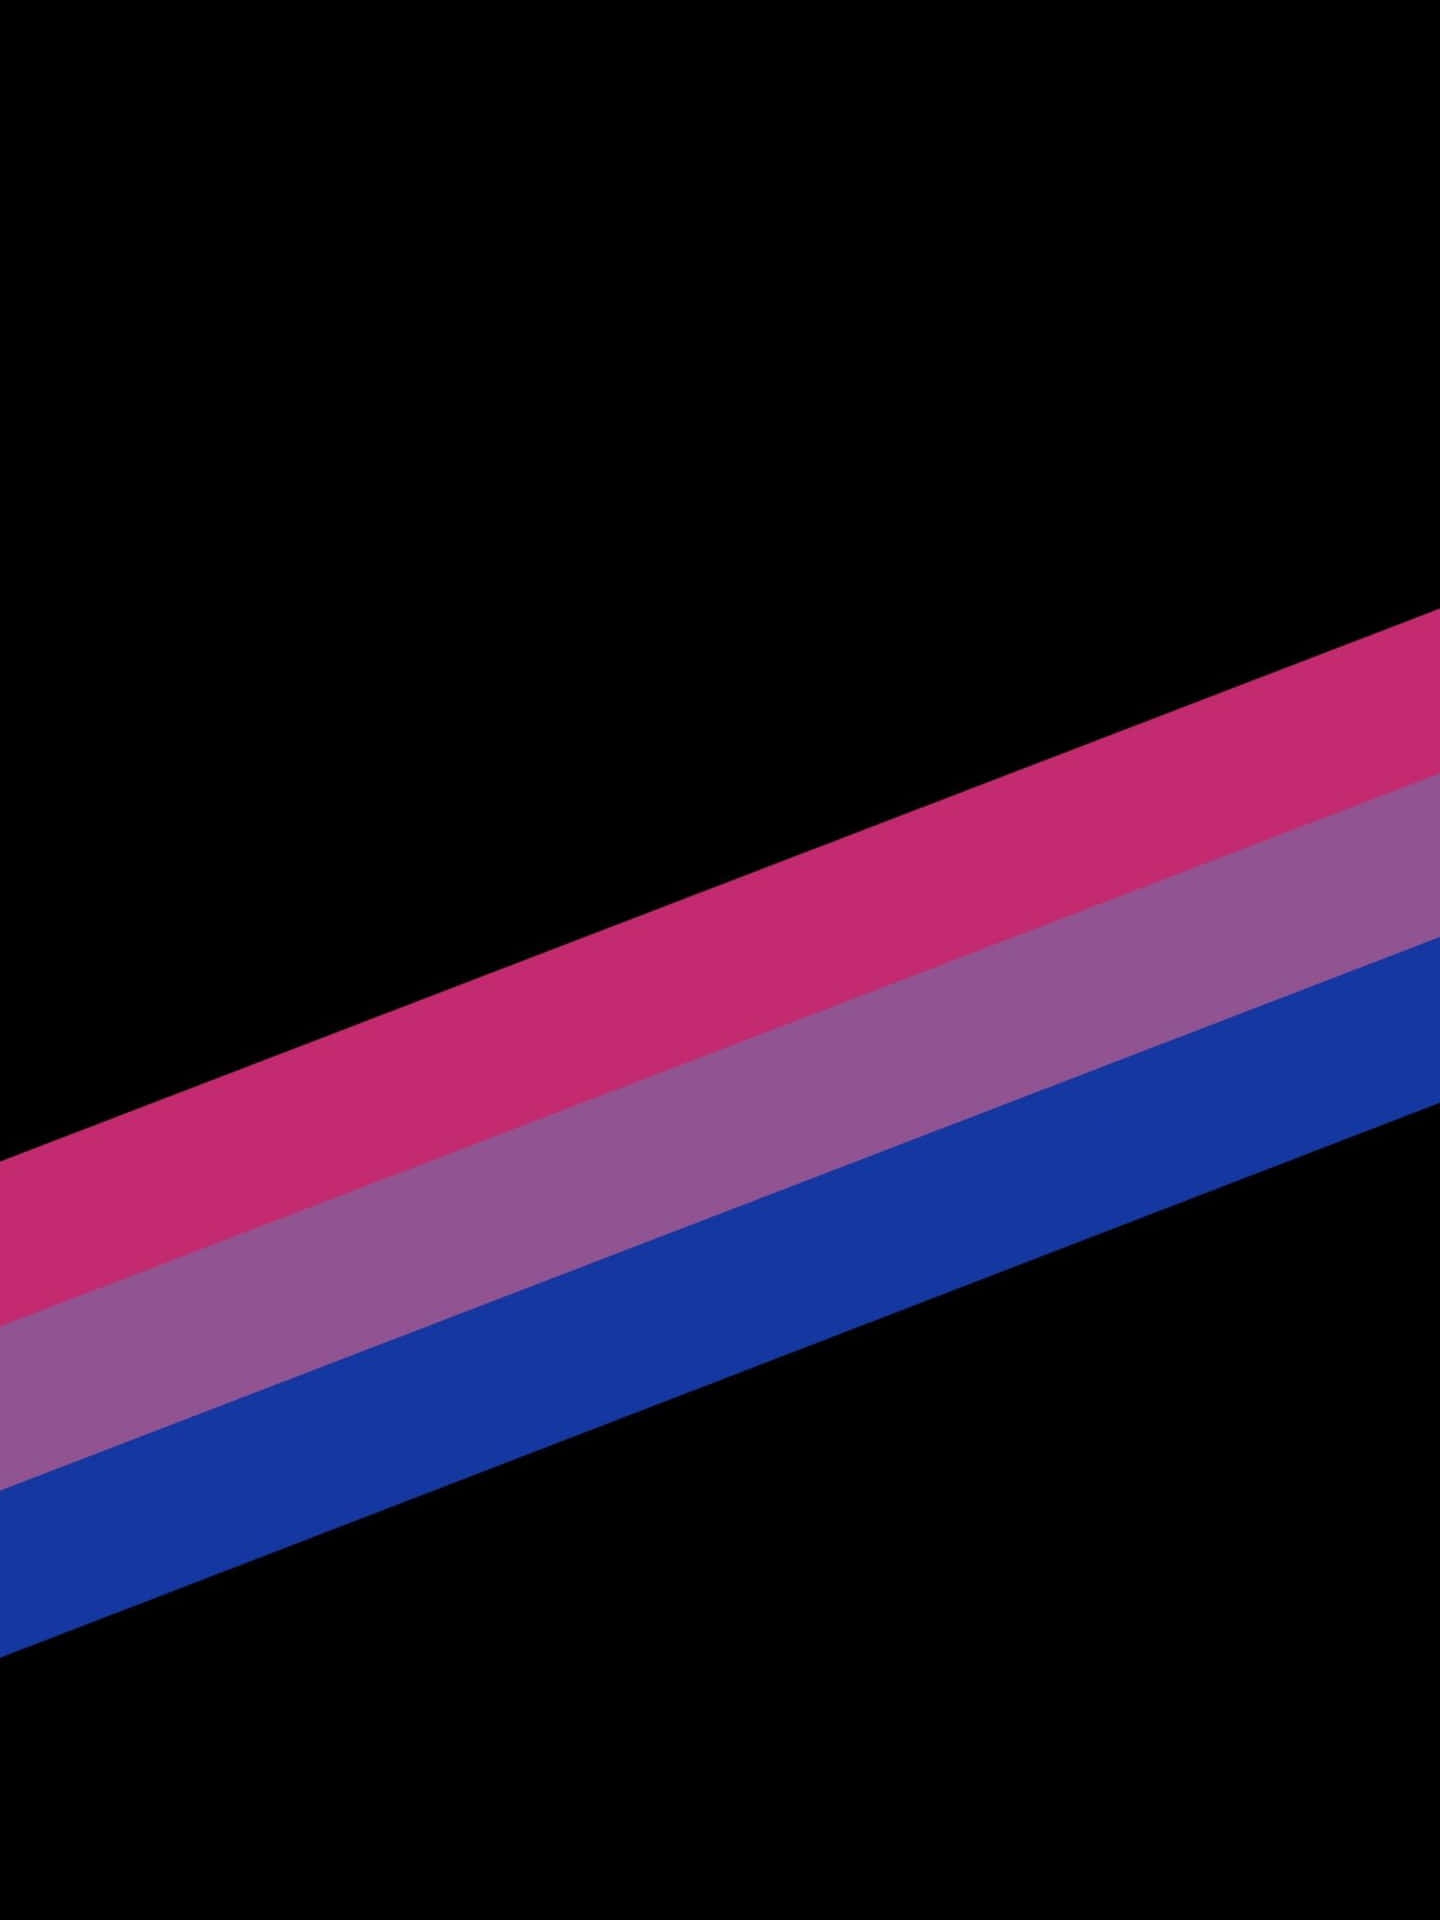 Estéticade La Bandera Bisexual Arcoíris Lgbt Fondo de pantalla